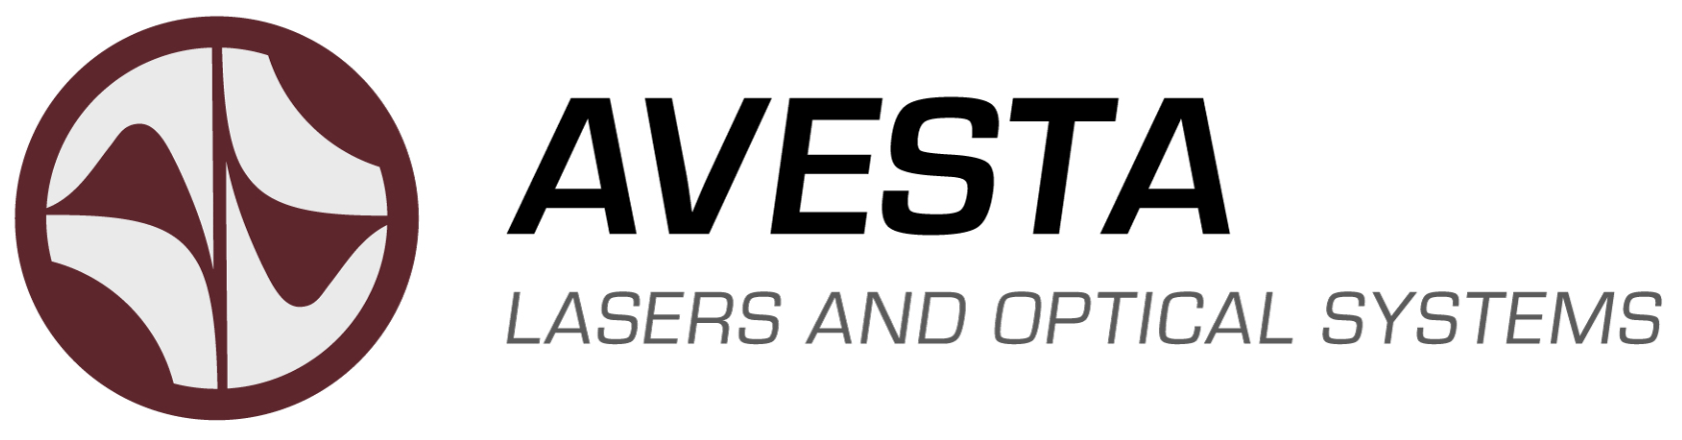 Avesta Project Ltd.-ロゴ